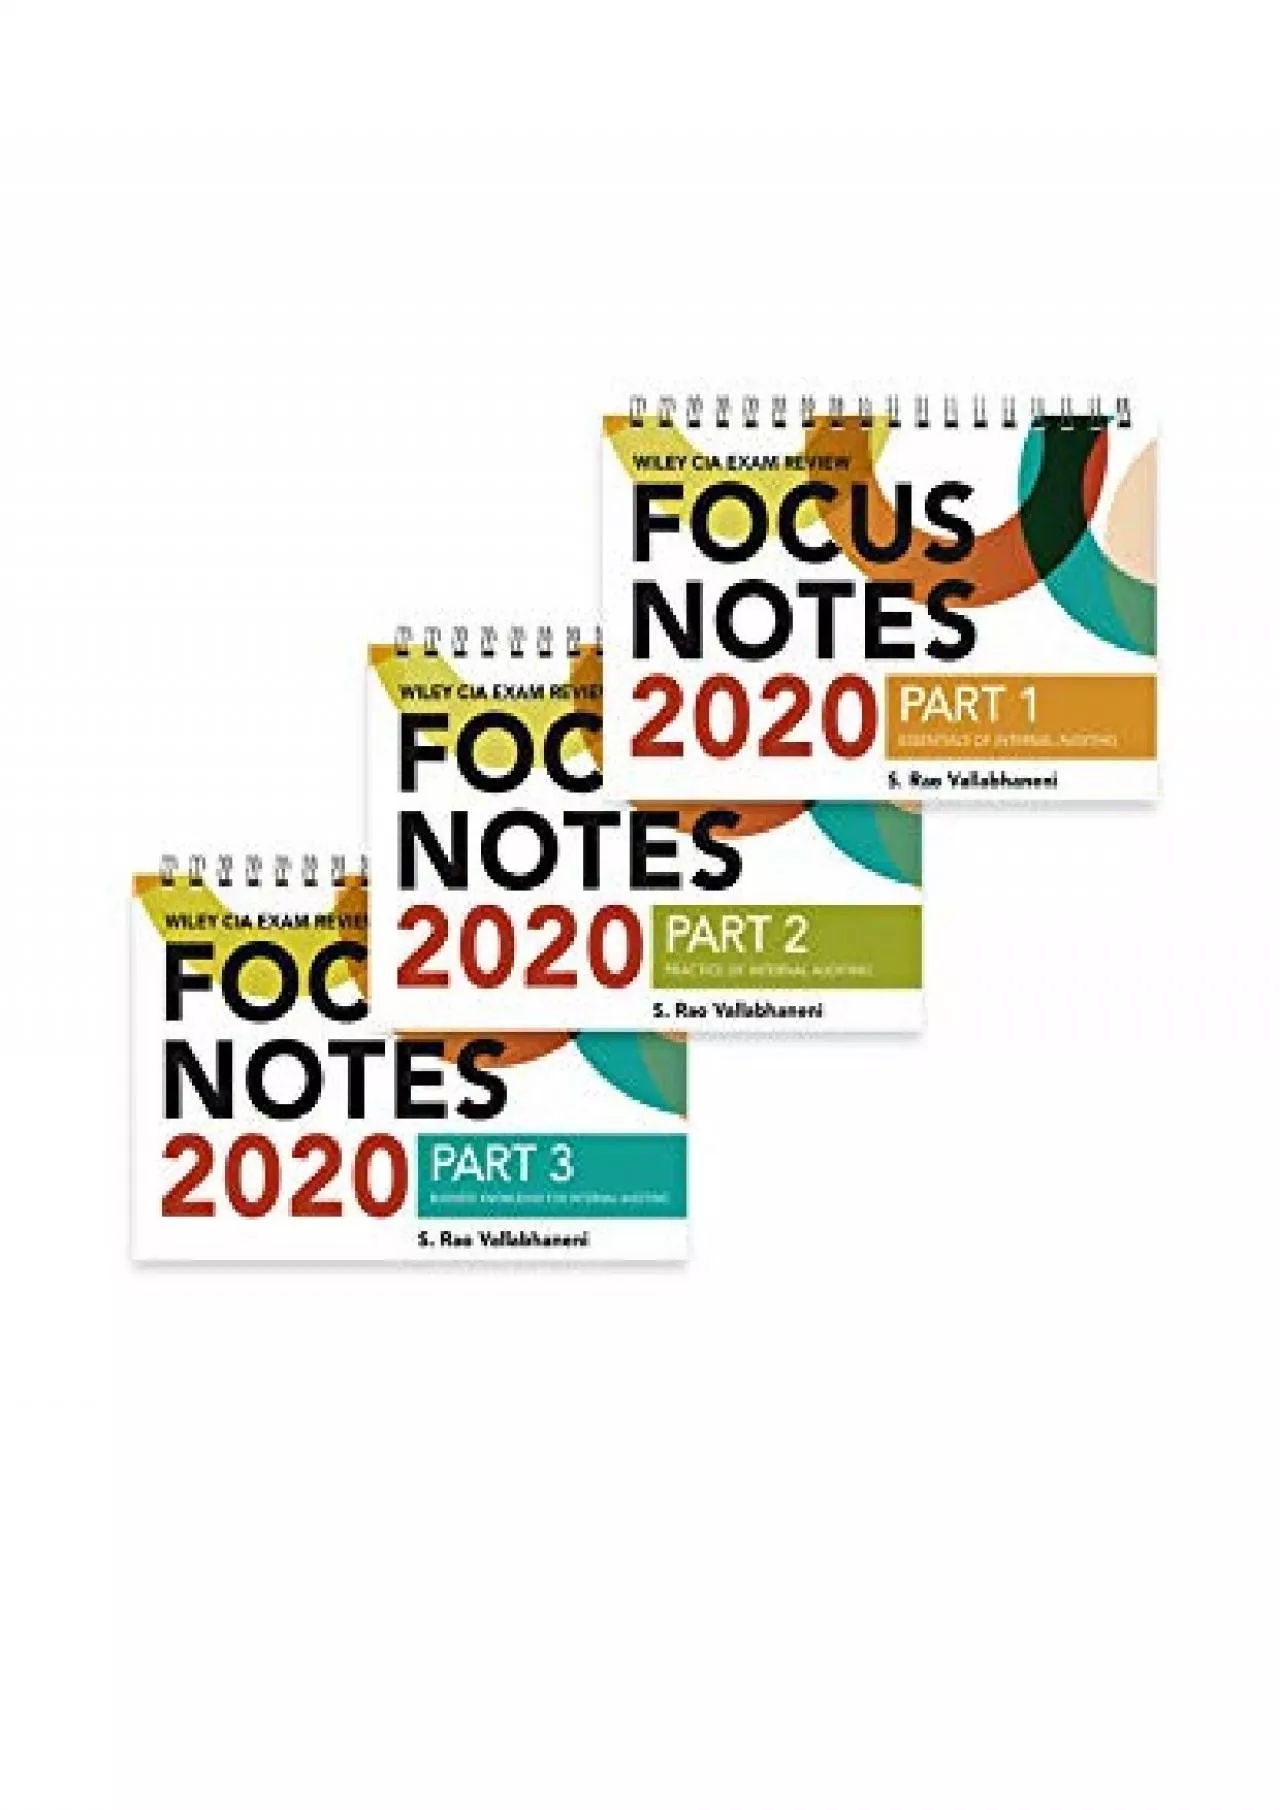 (BOOS)-Wiley CIA Exam Review Focus Notes 2020: Complete Set